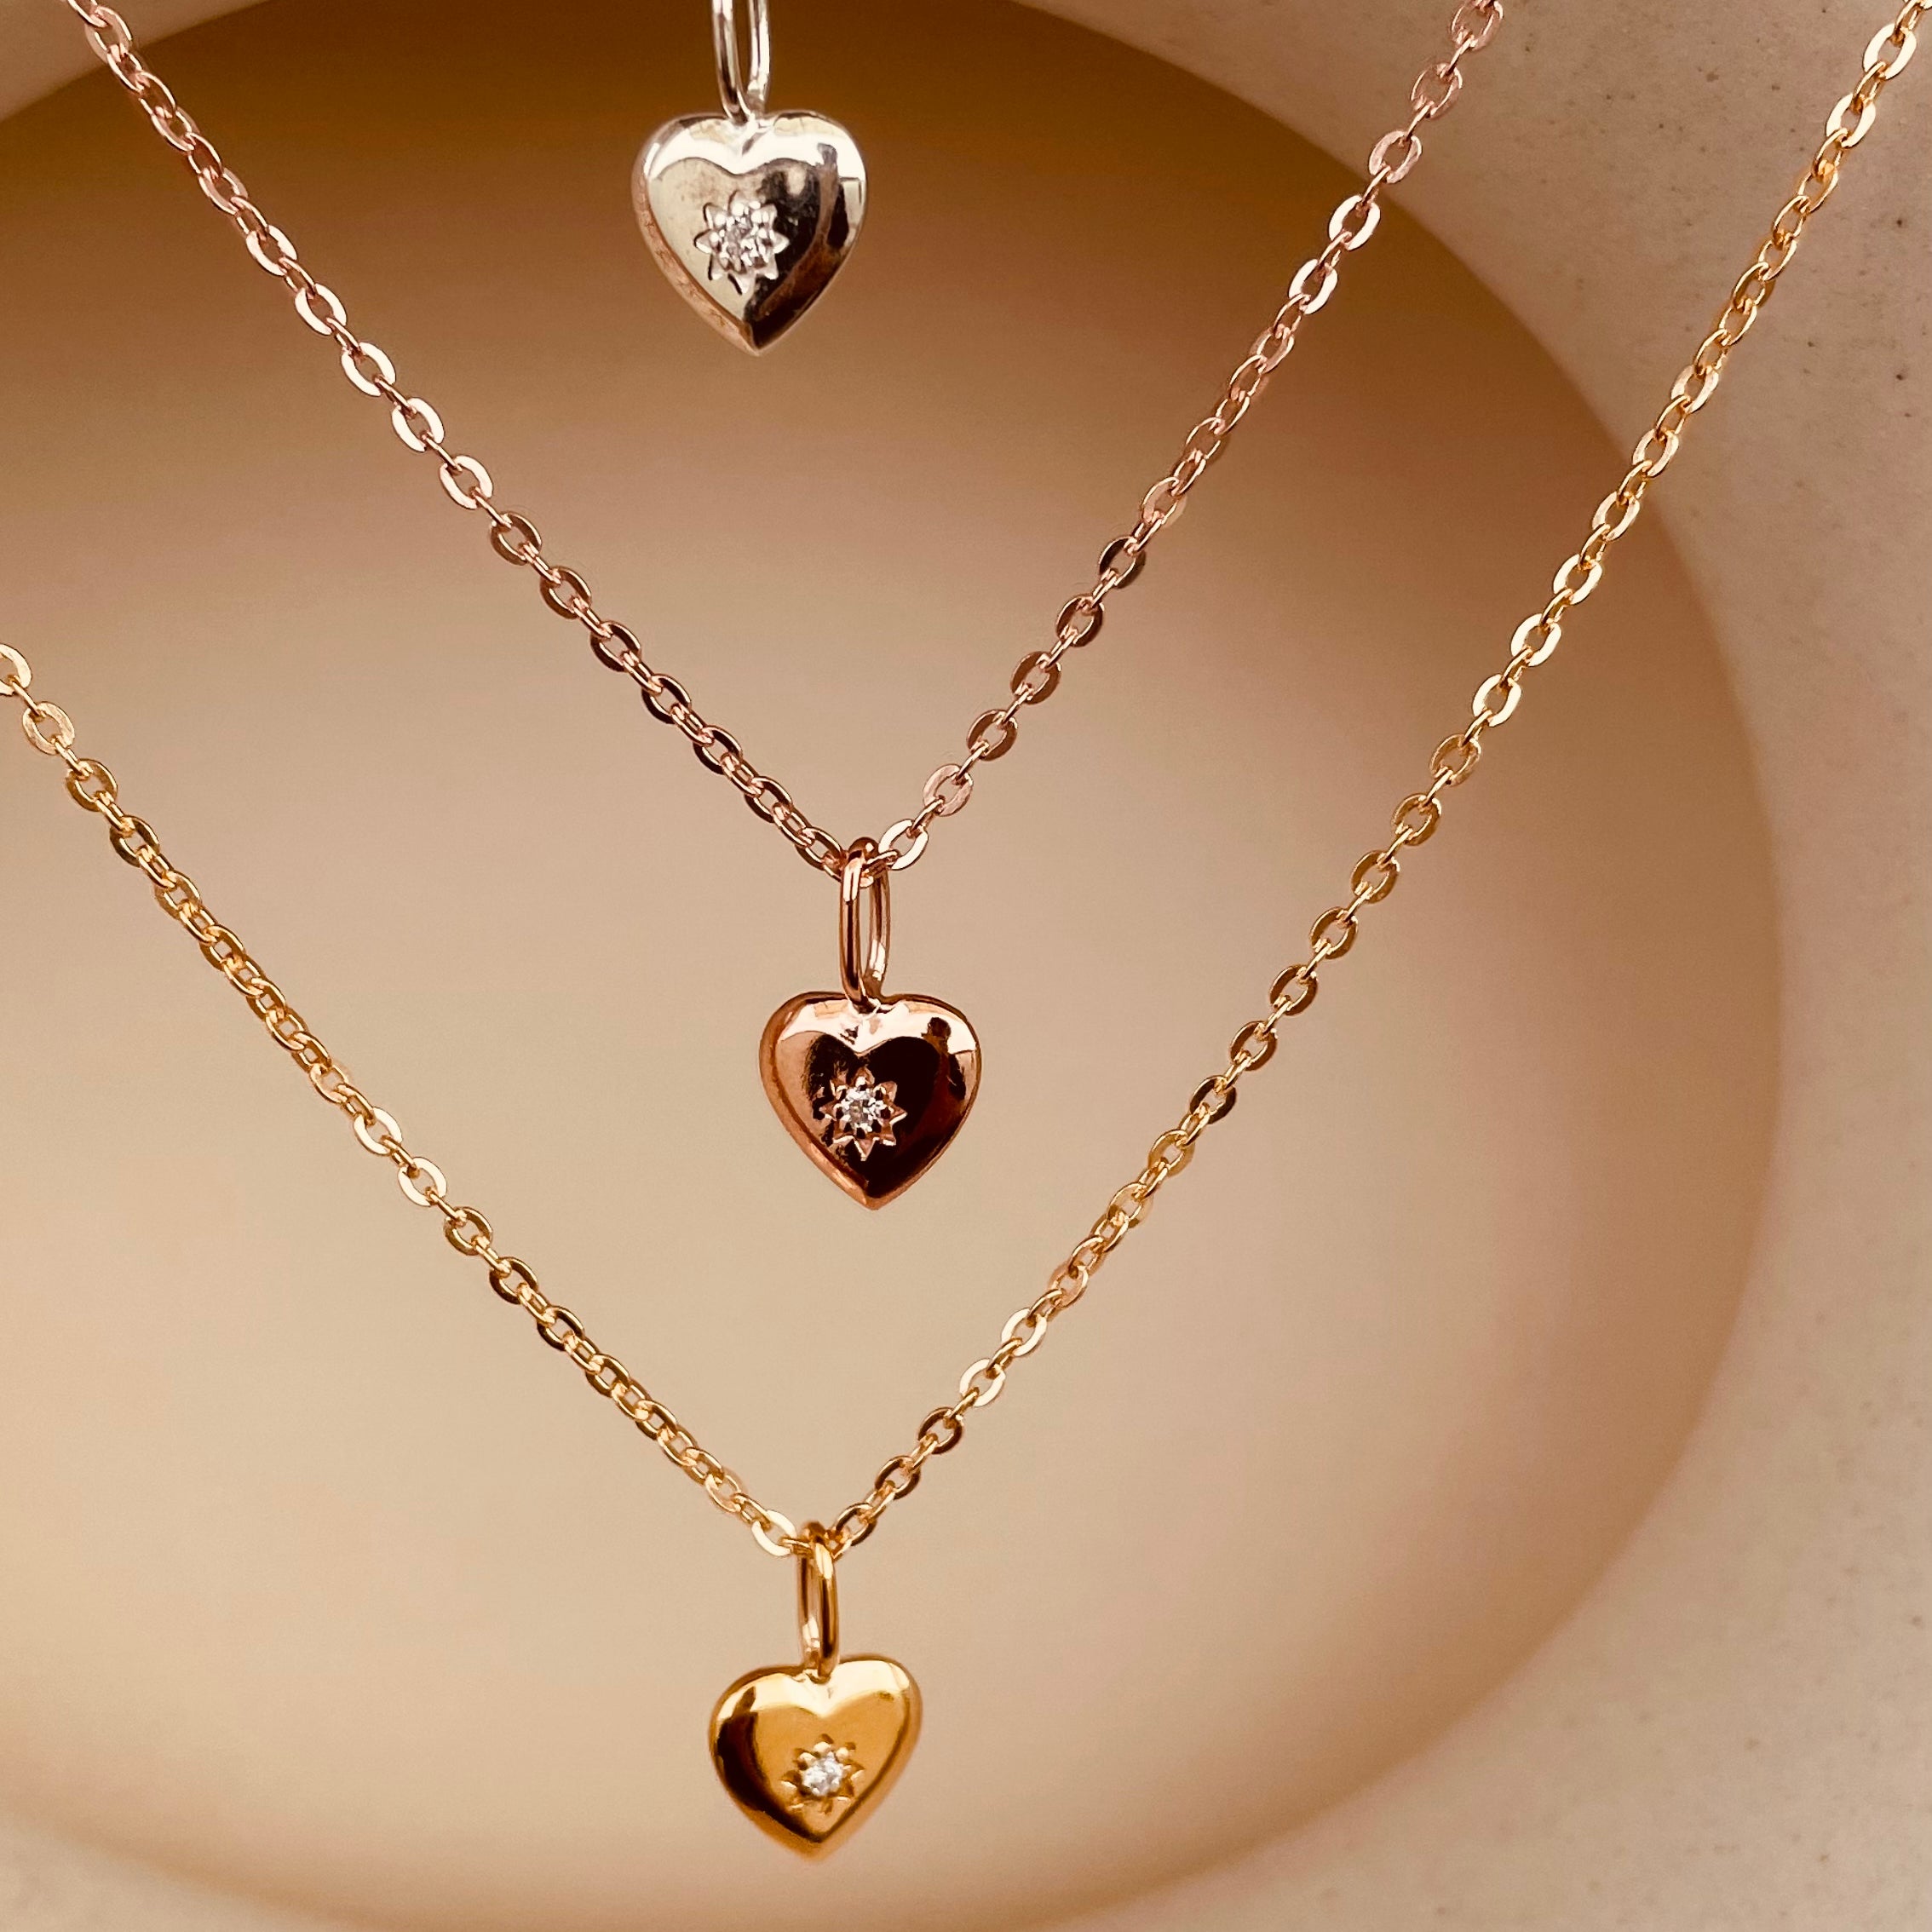 Dainty Vintage Heart Necklace with Sitara Chain - Octonov 